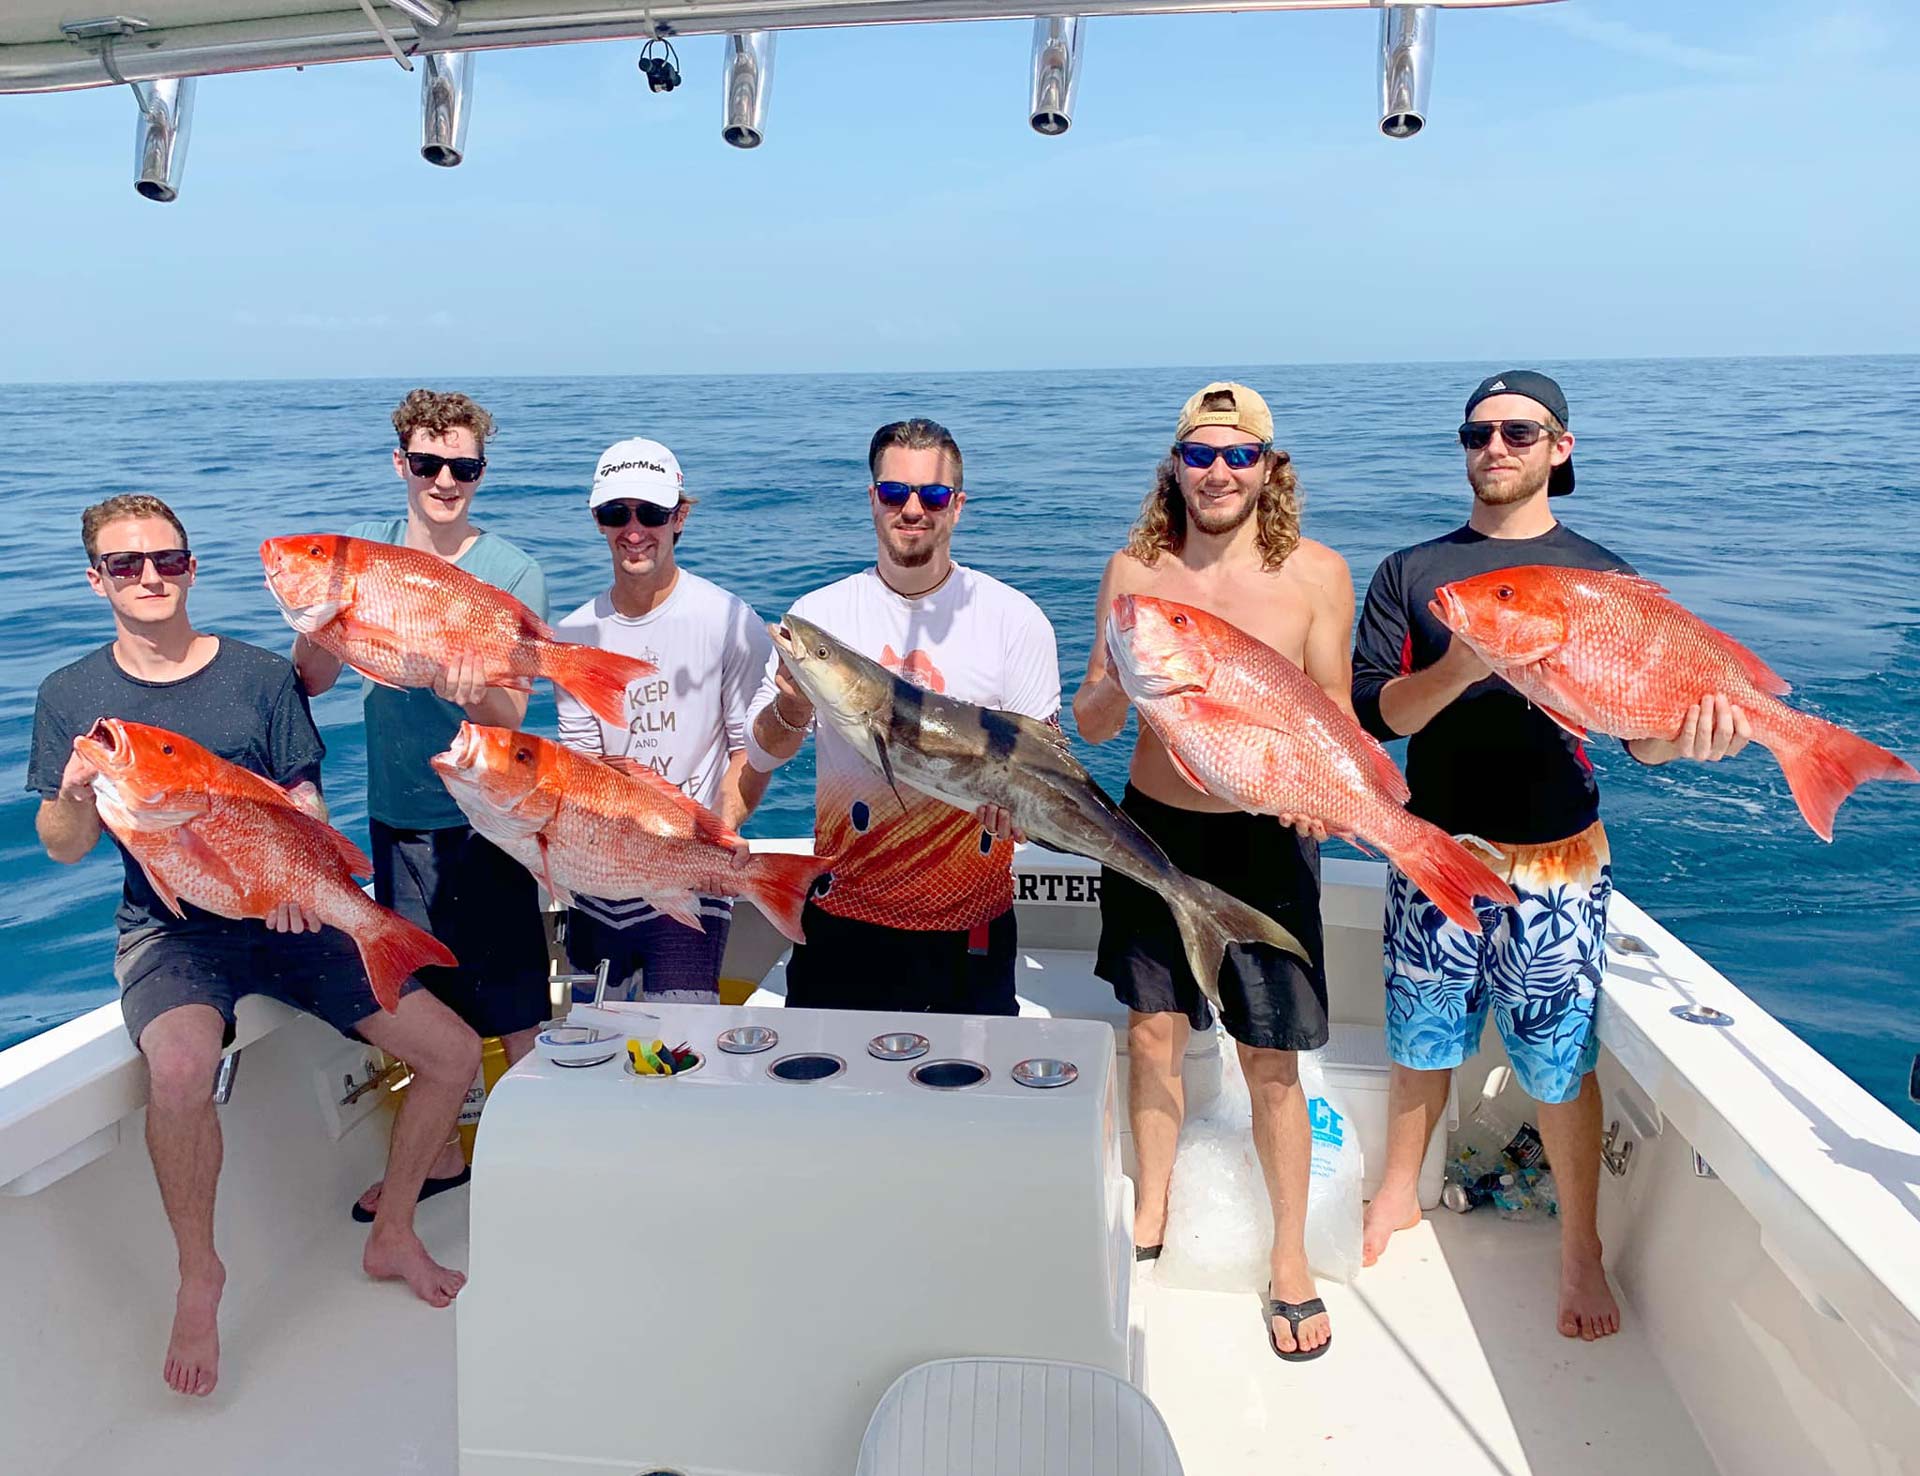 A group in Daytona Beach caught redfish on Deep Sea Fishing Charter